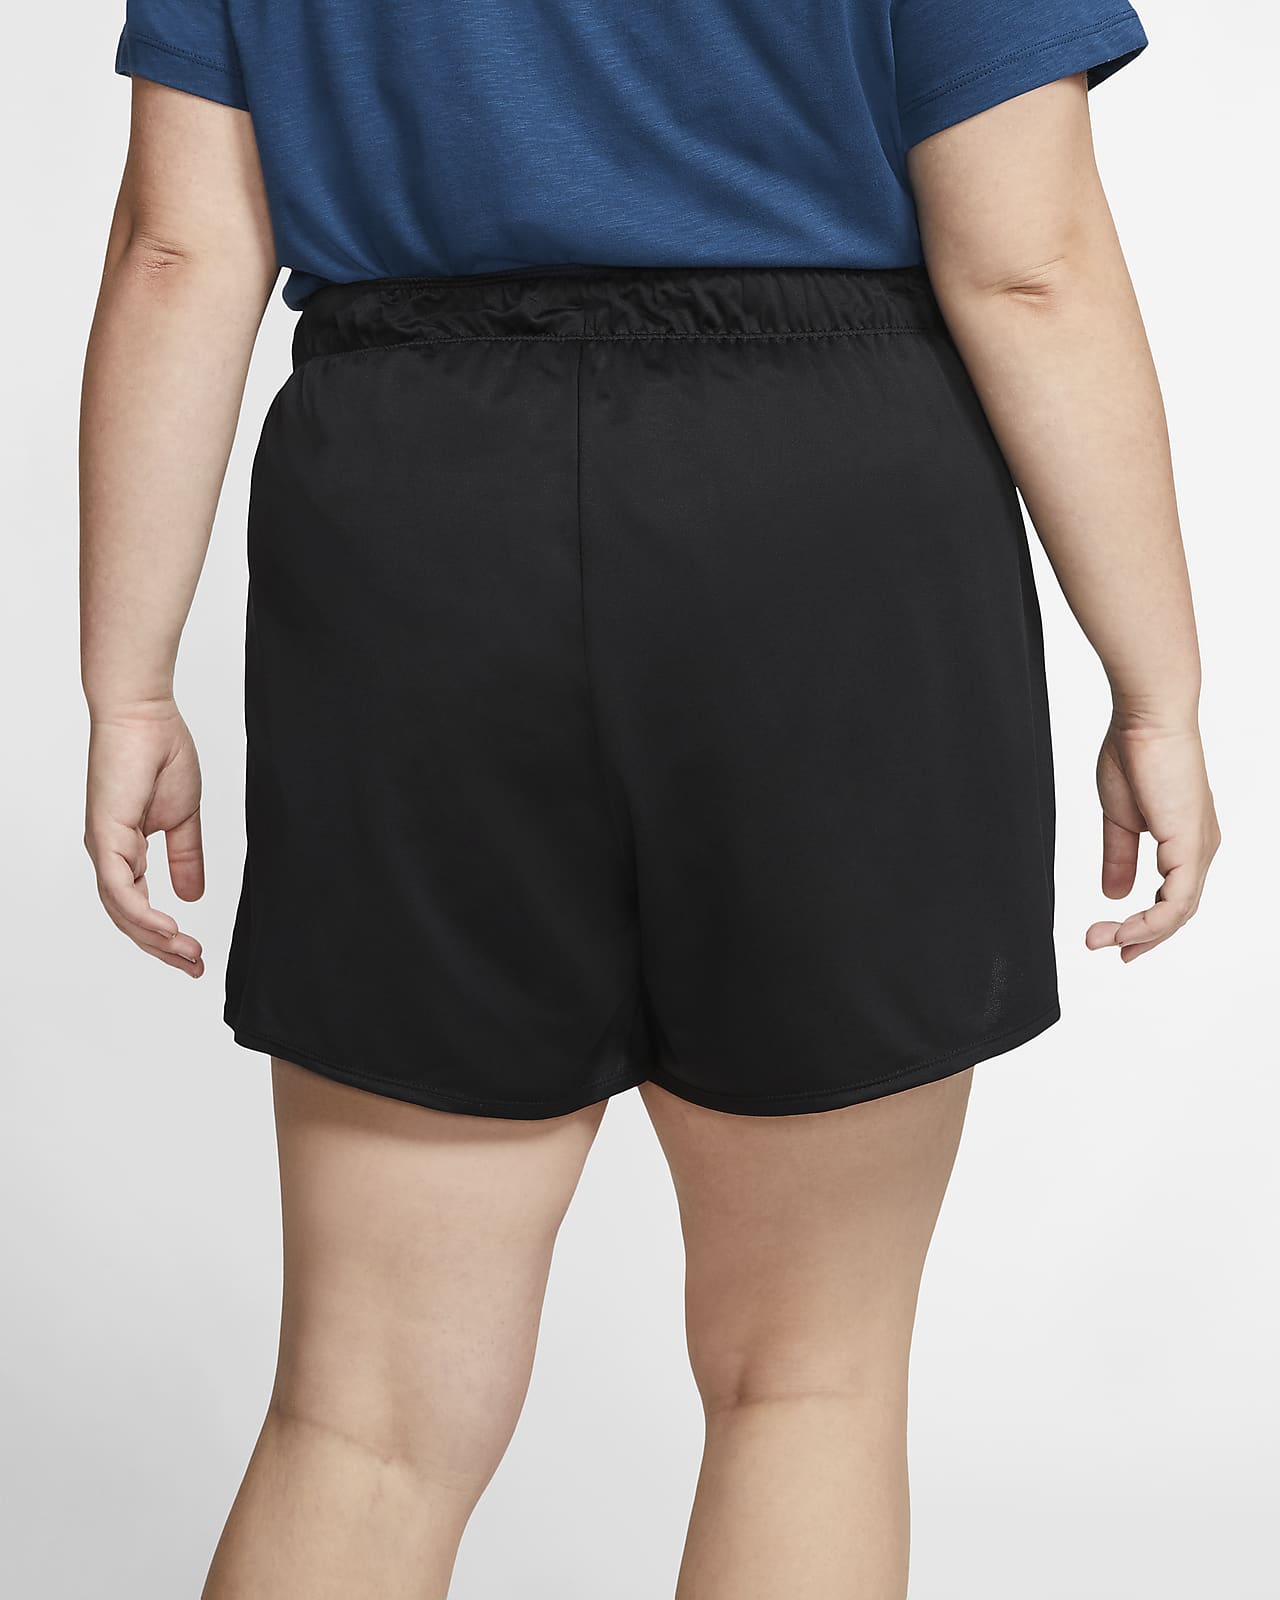 Nike Dri-FIT Women's Training Shorts 